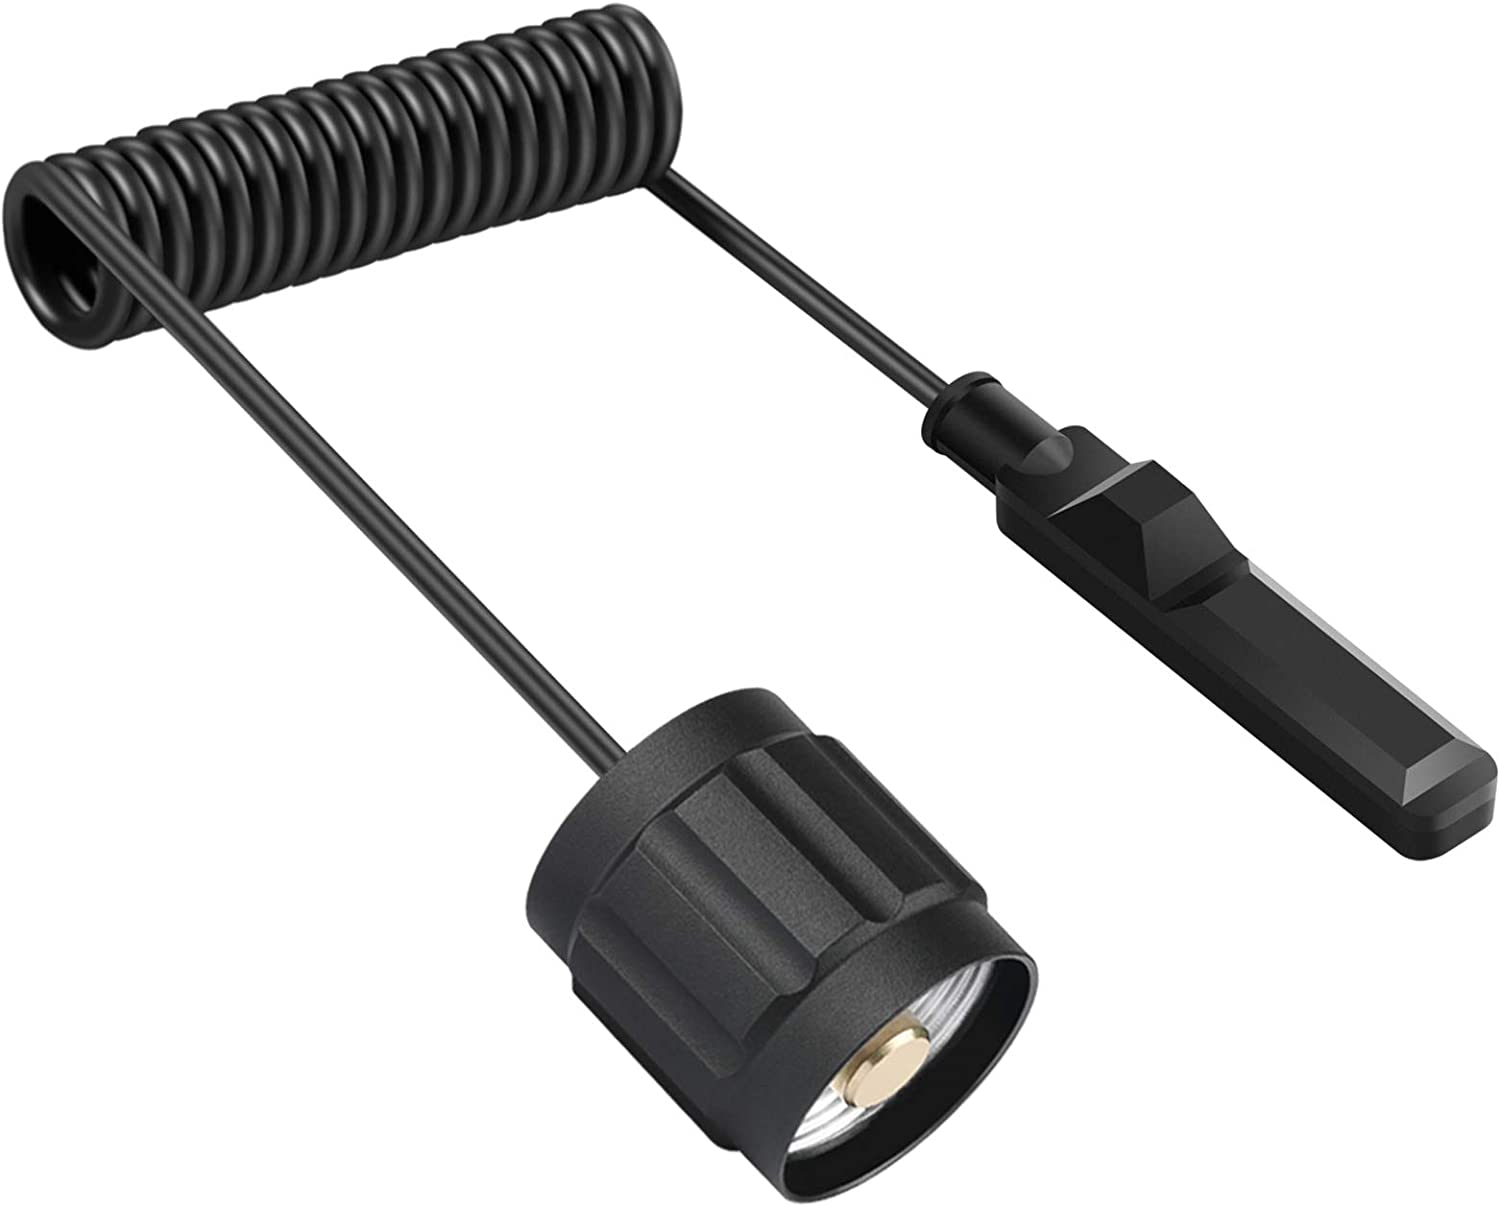 Pressostat Feyachi PS-16 - Compatible avec lampe de poche tactique